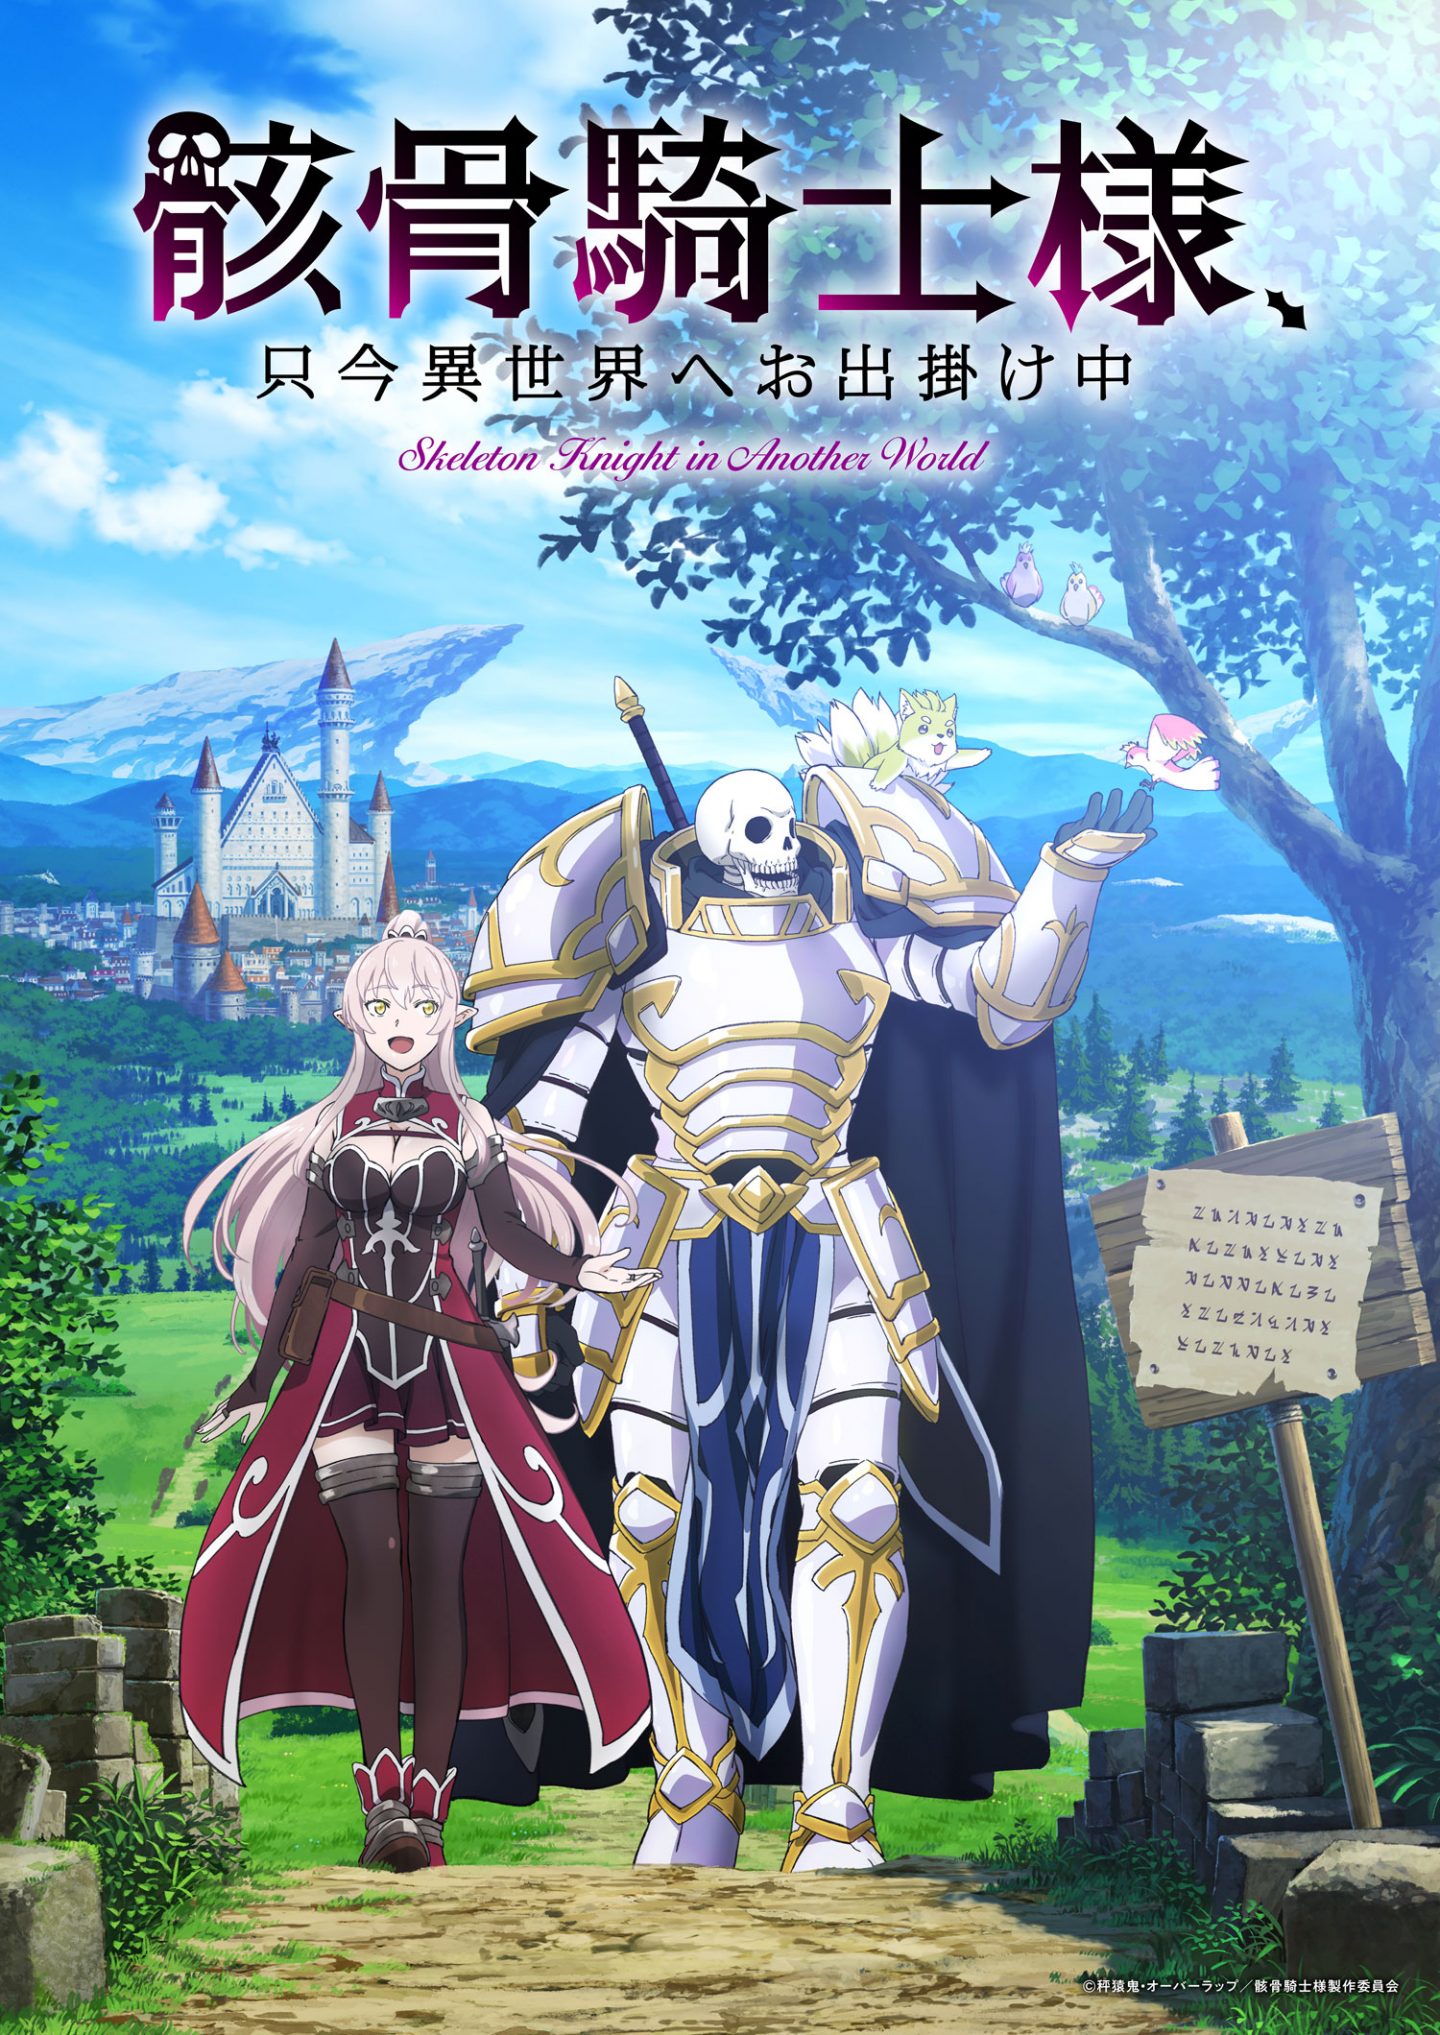 Banner Phim Gaikotsu Kishi-sama, Tadaima Isekai e Odekakechuu - Skeleton Knight in Another World,Skeleton Knight going out to the parallel universe ()